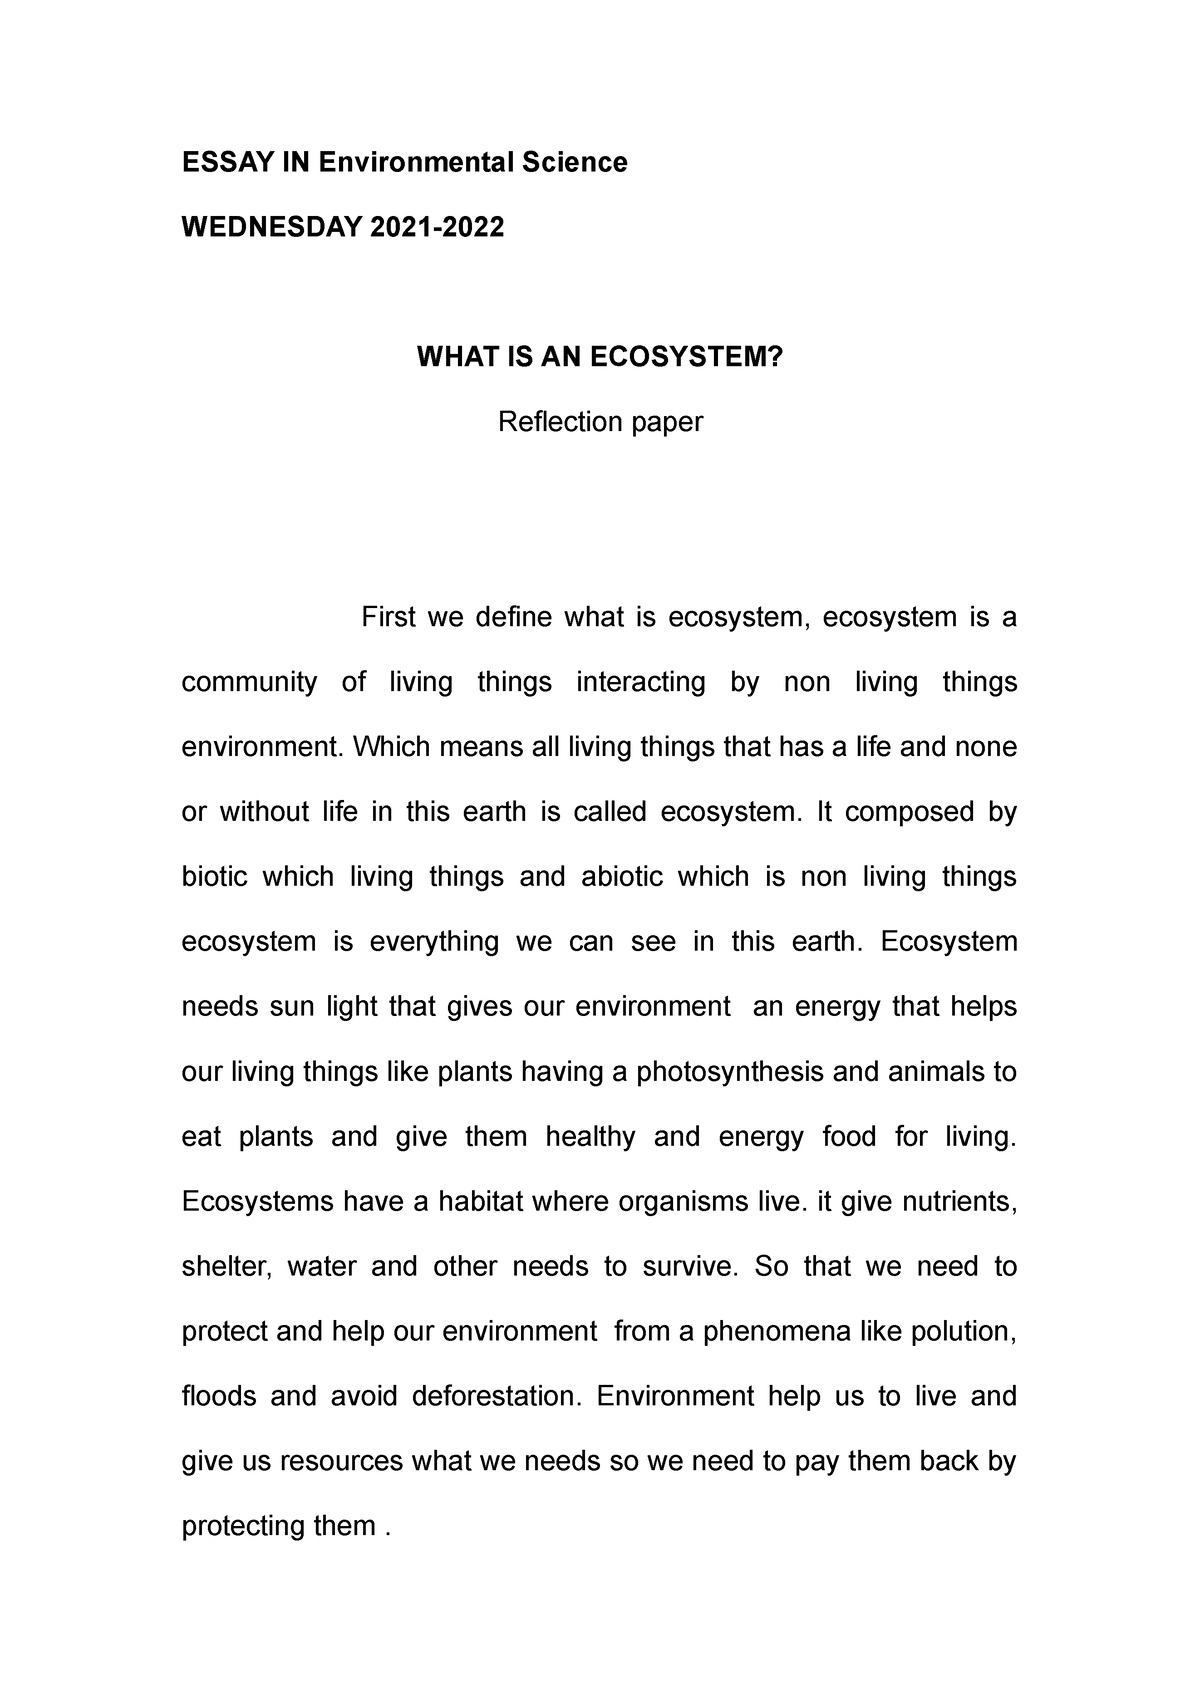 conclusion of ecosystem essay